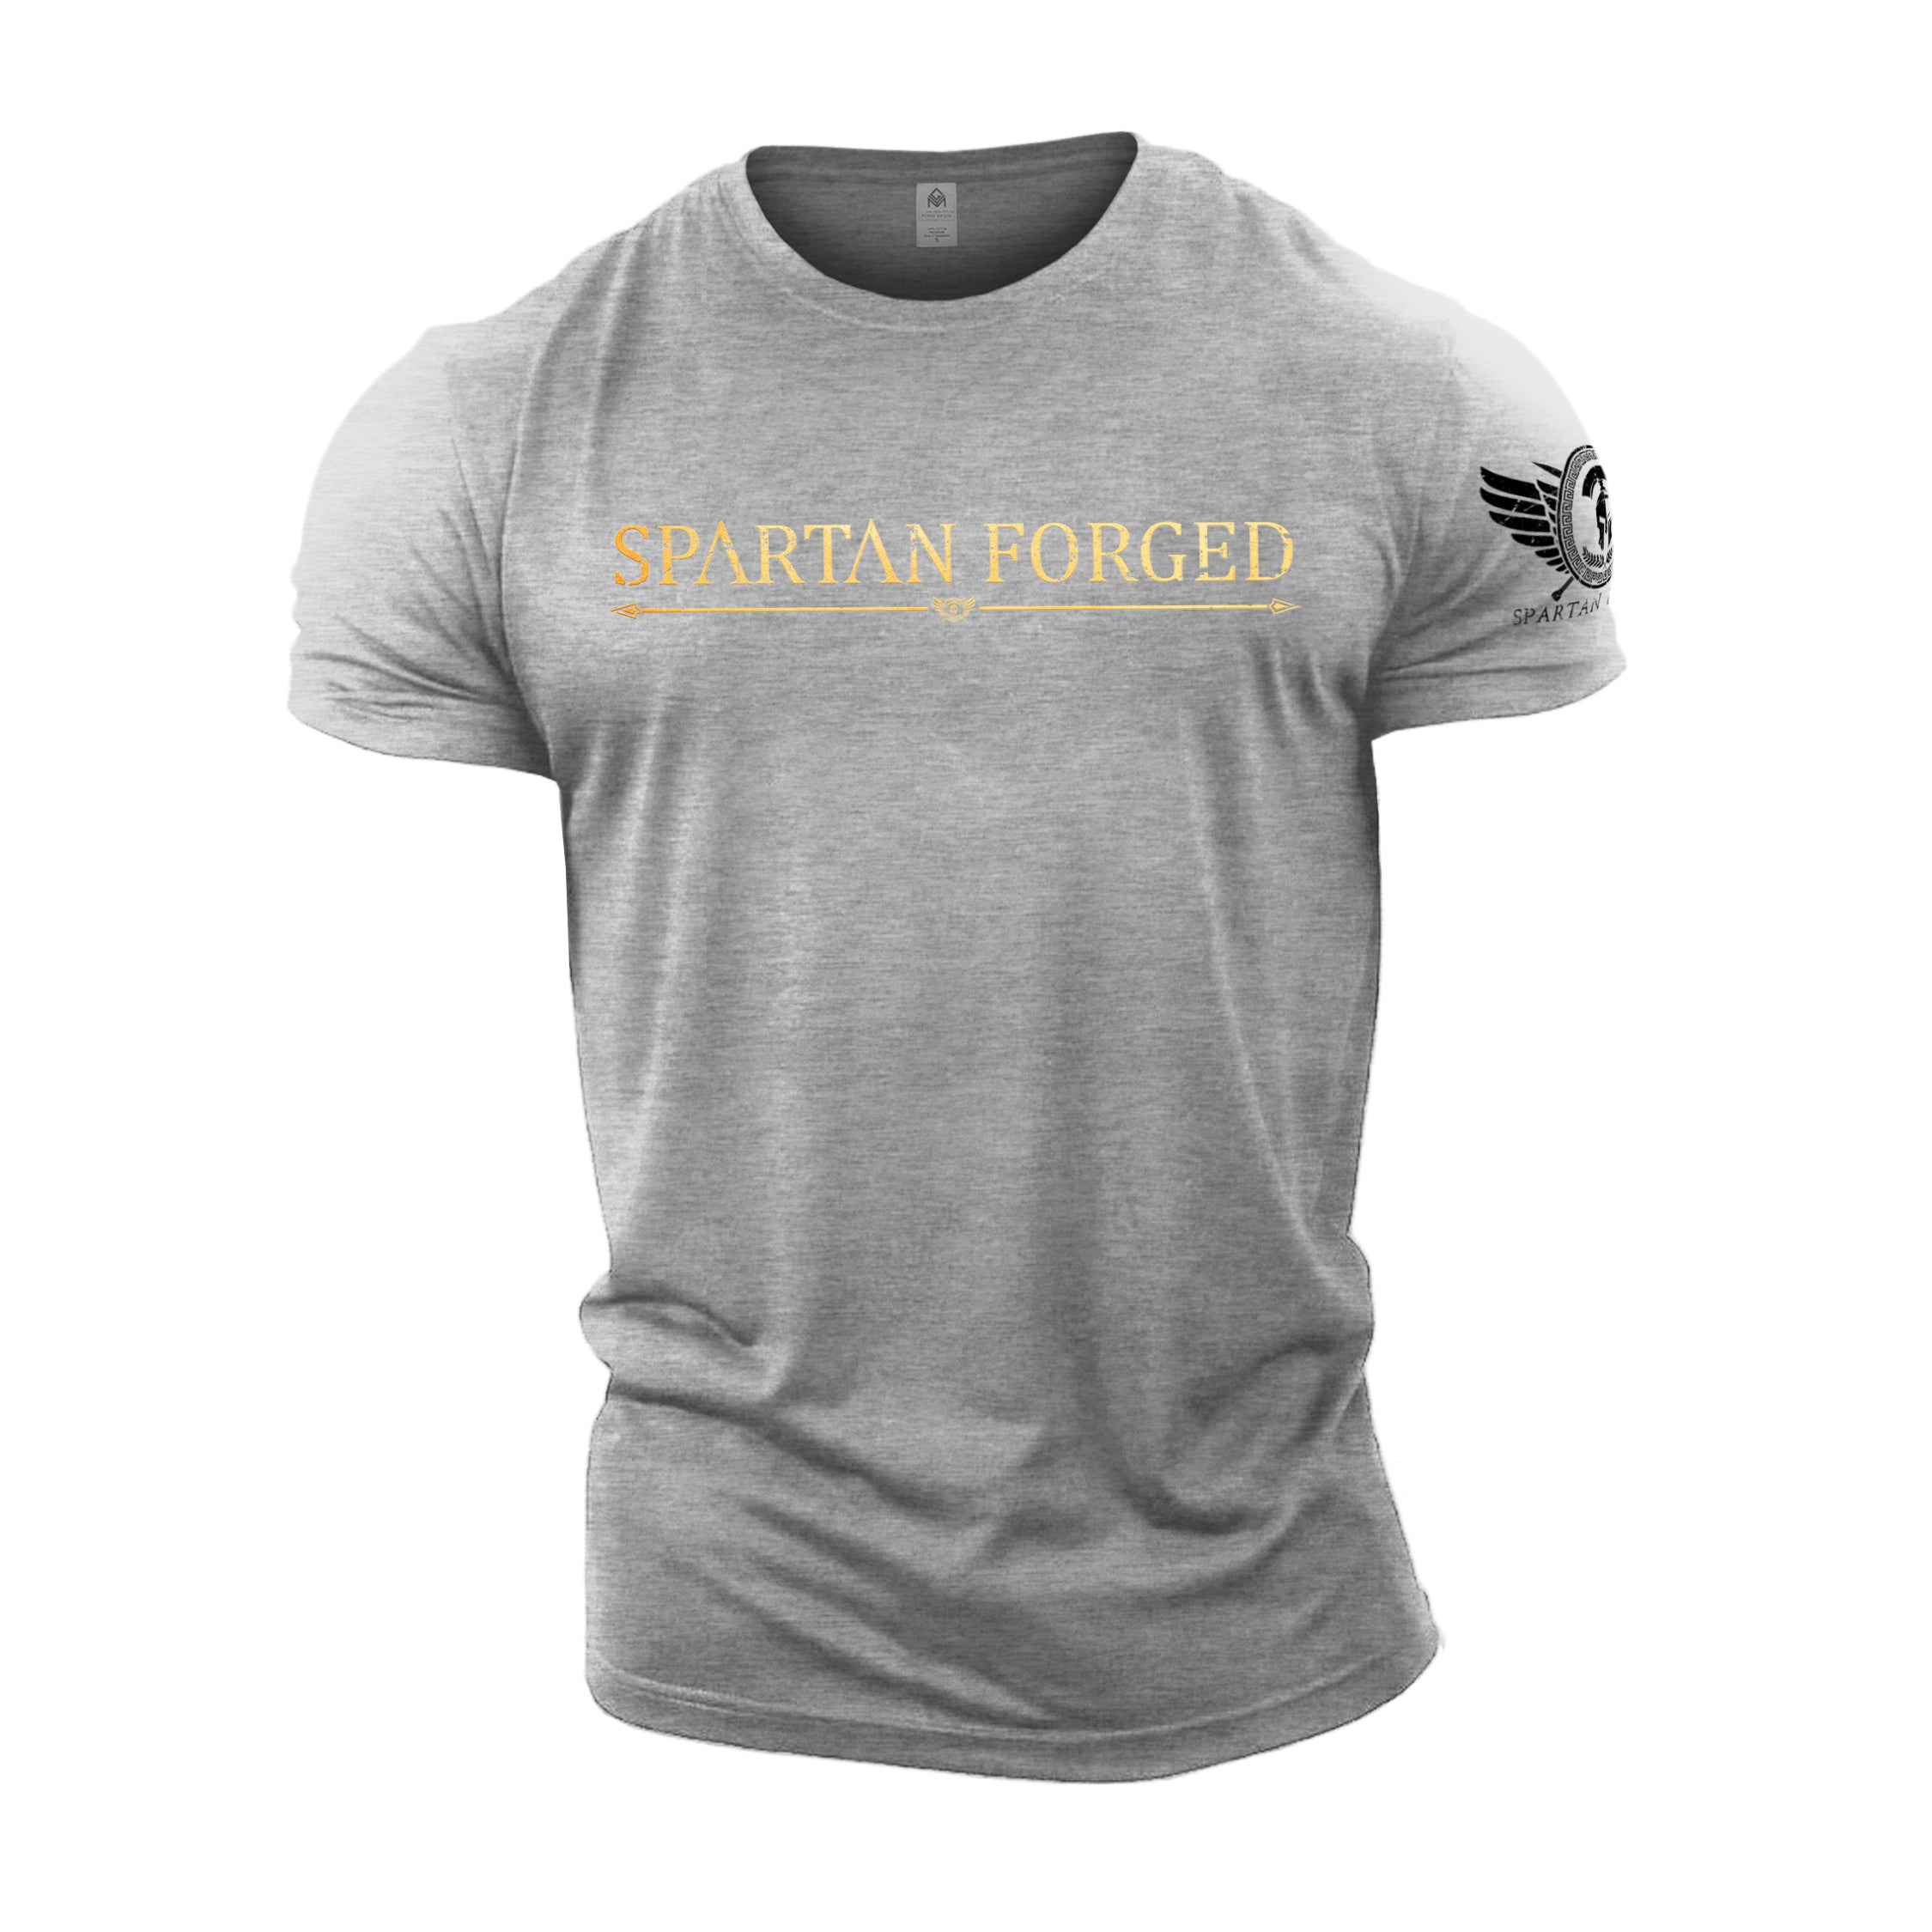 Spartan Forged Gold - Spartan Forged - Gym T-Shirt